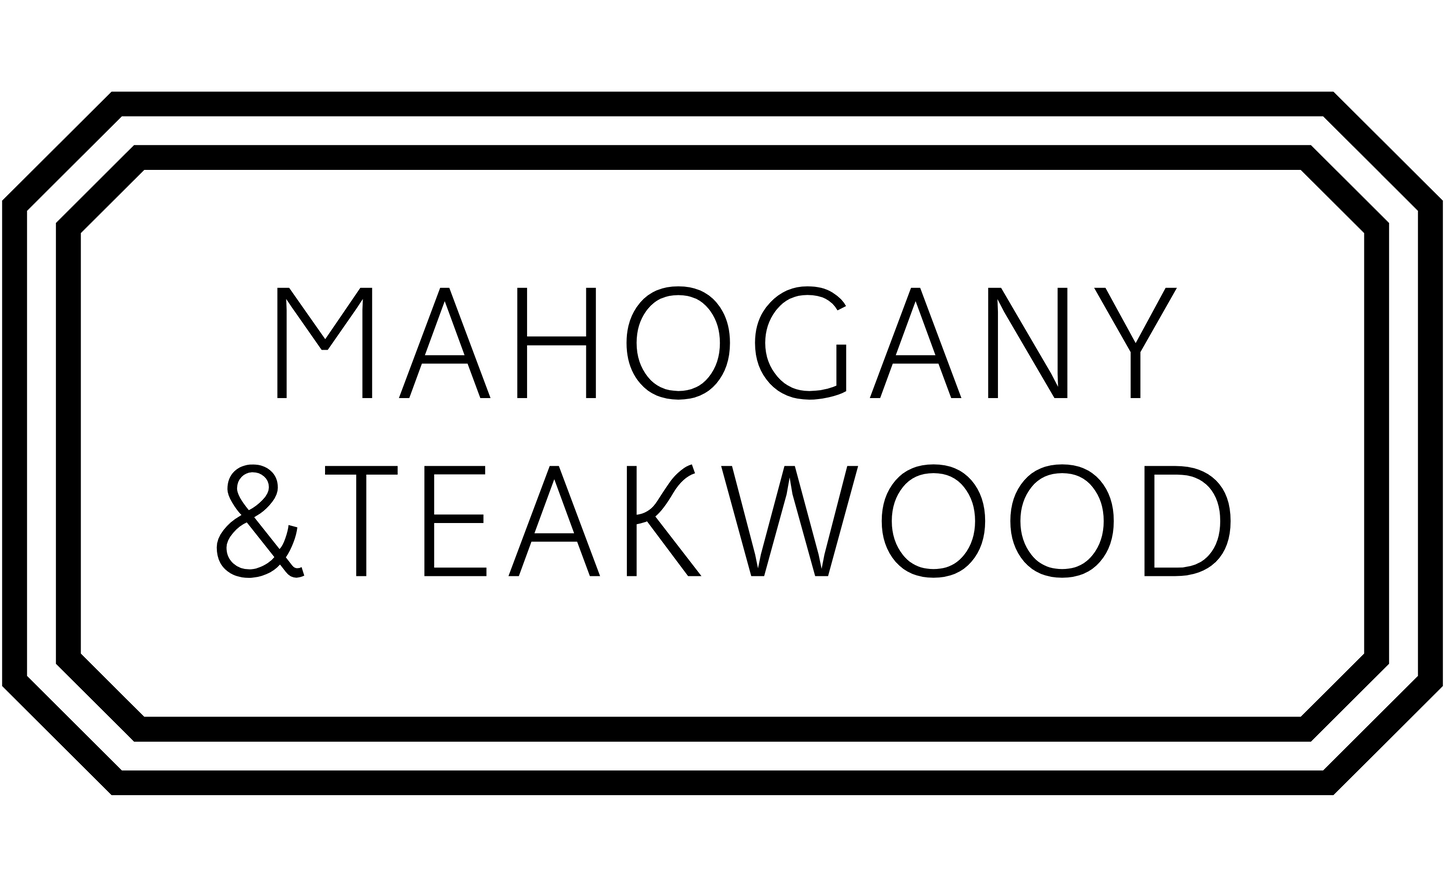 Just the Candle - Mahogany & Teakwood